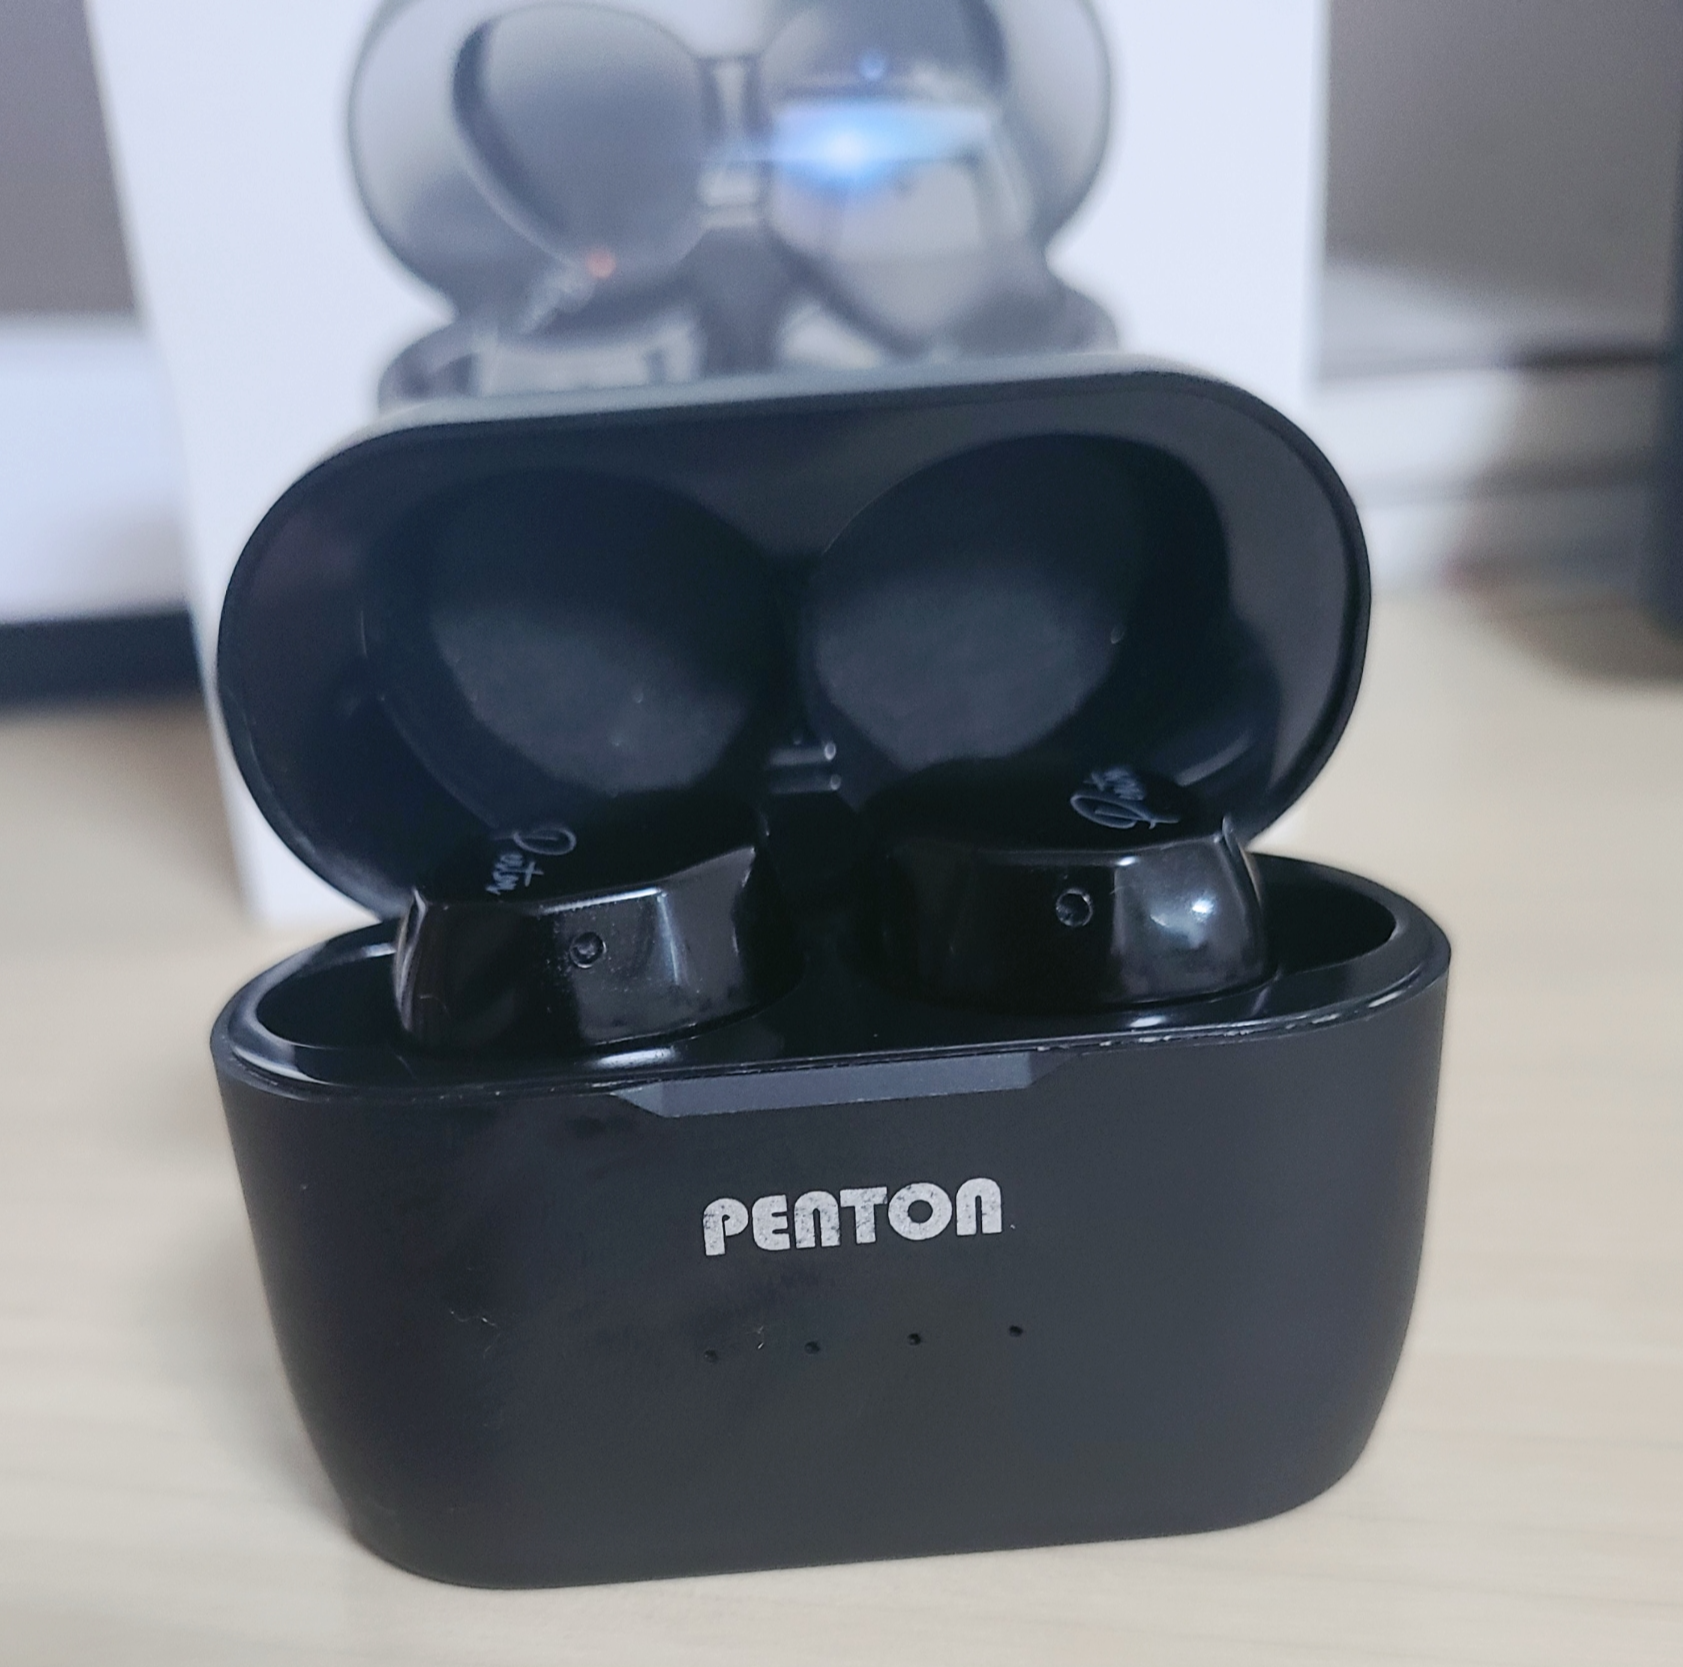 penton tsx 다이아팟 펜톤 가성비 이어폰 구매 후기 한쪽만 페어링 문제 해결